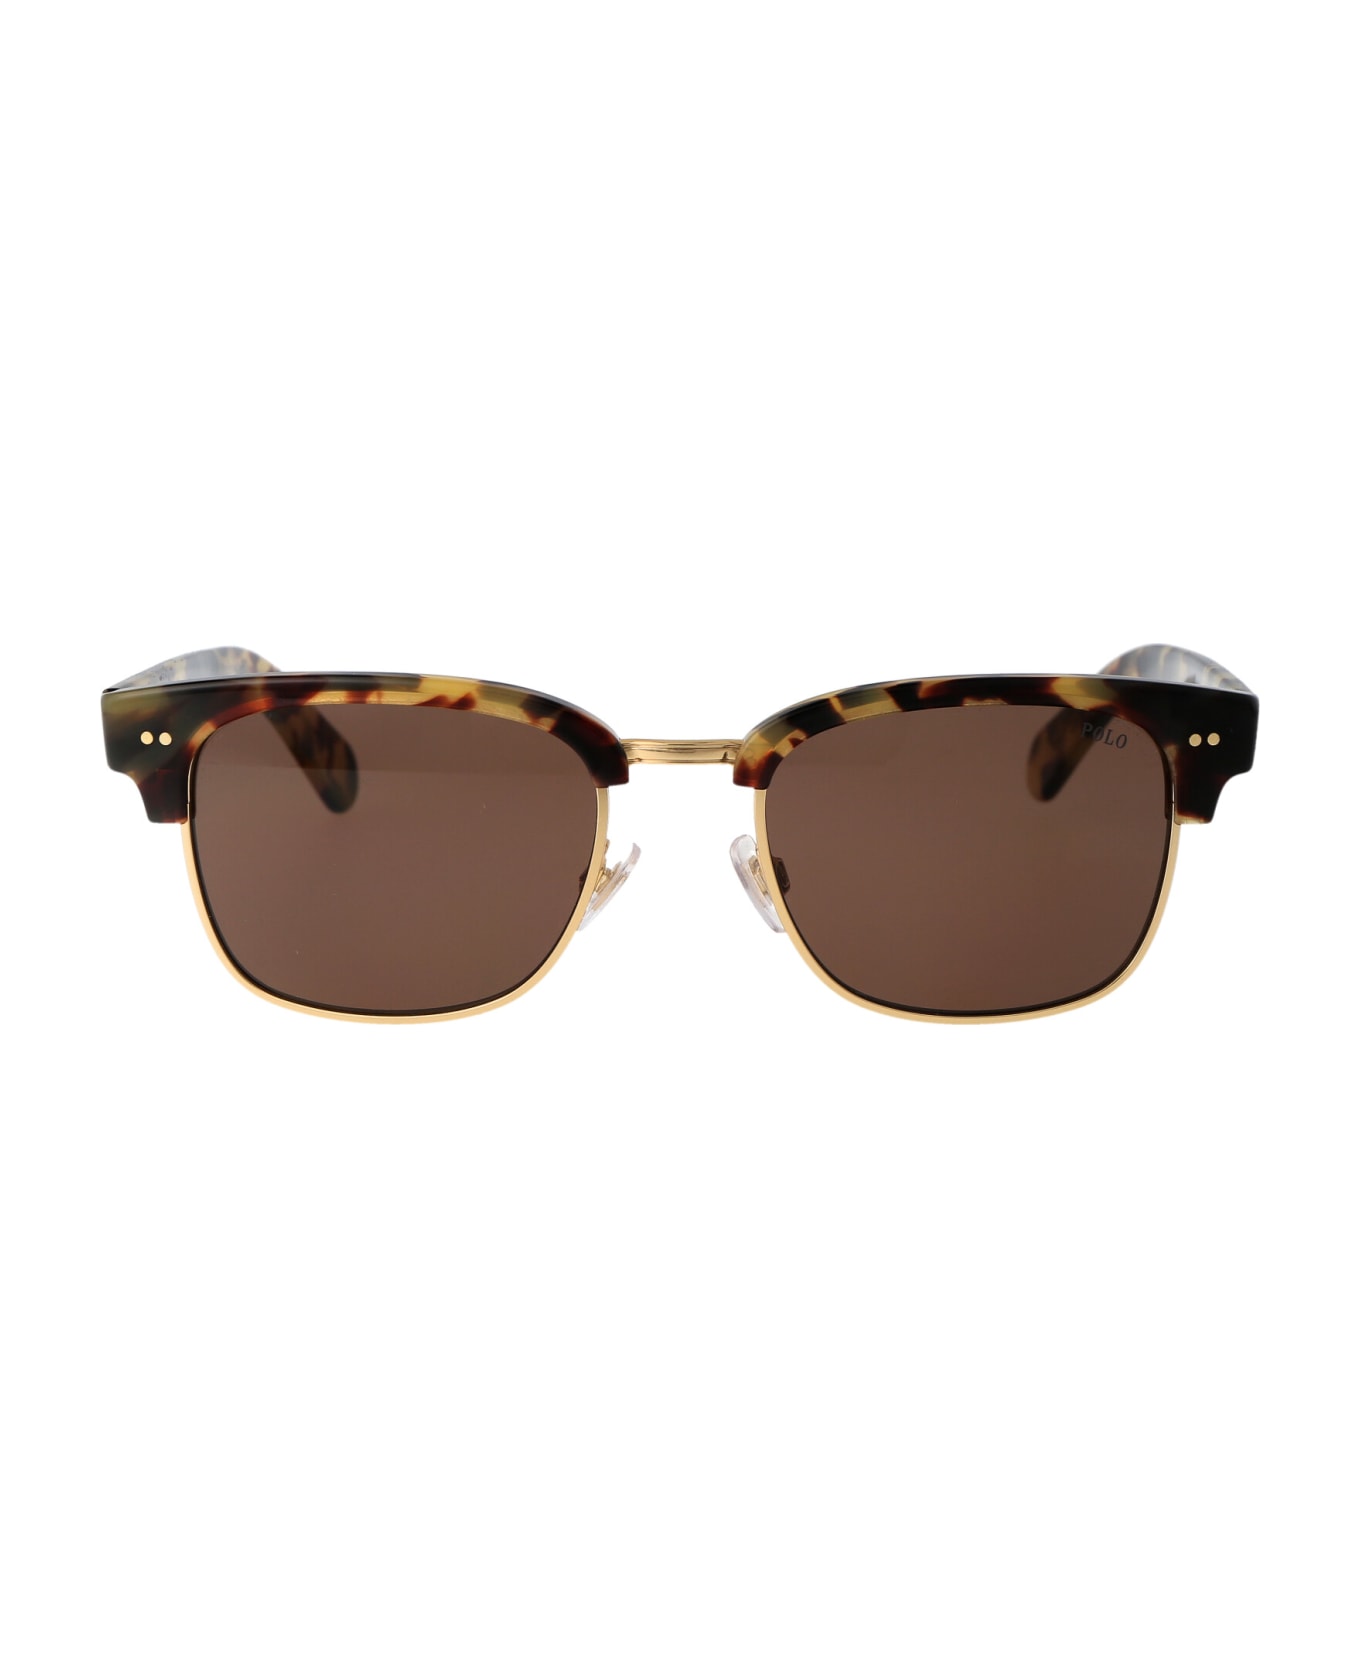 Polo Ralph Lauren 0ph4202 Sunglasses - 608773 Shiny Camo Havana